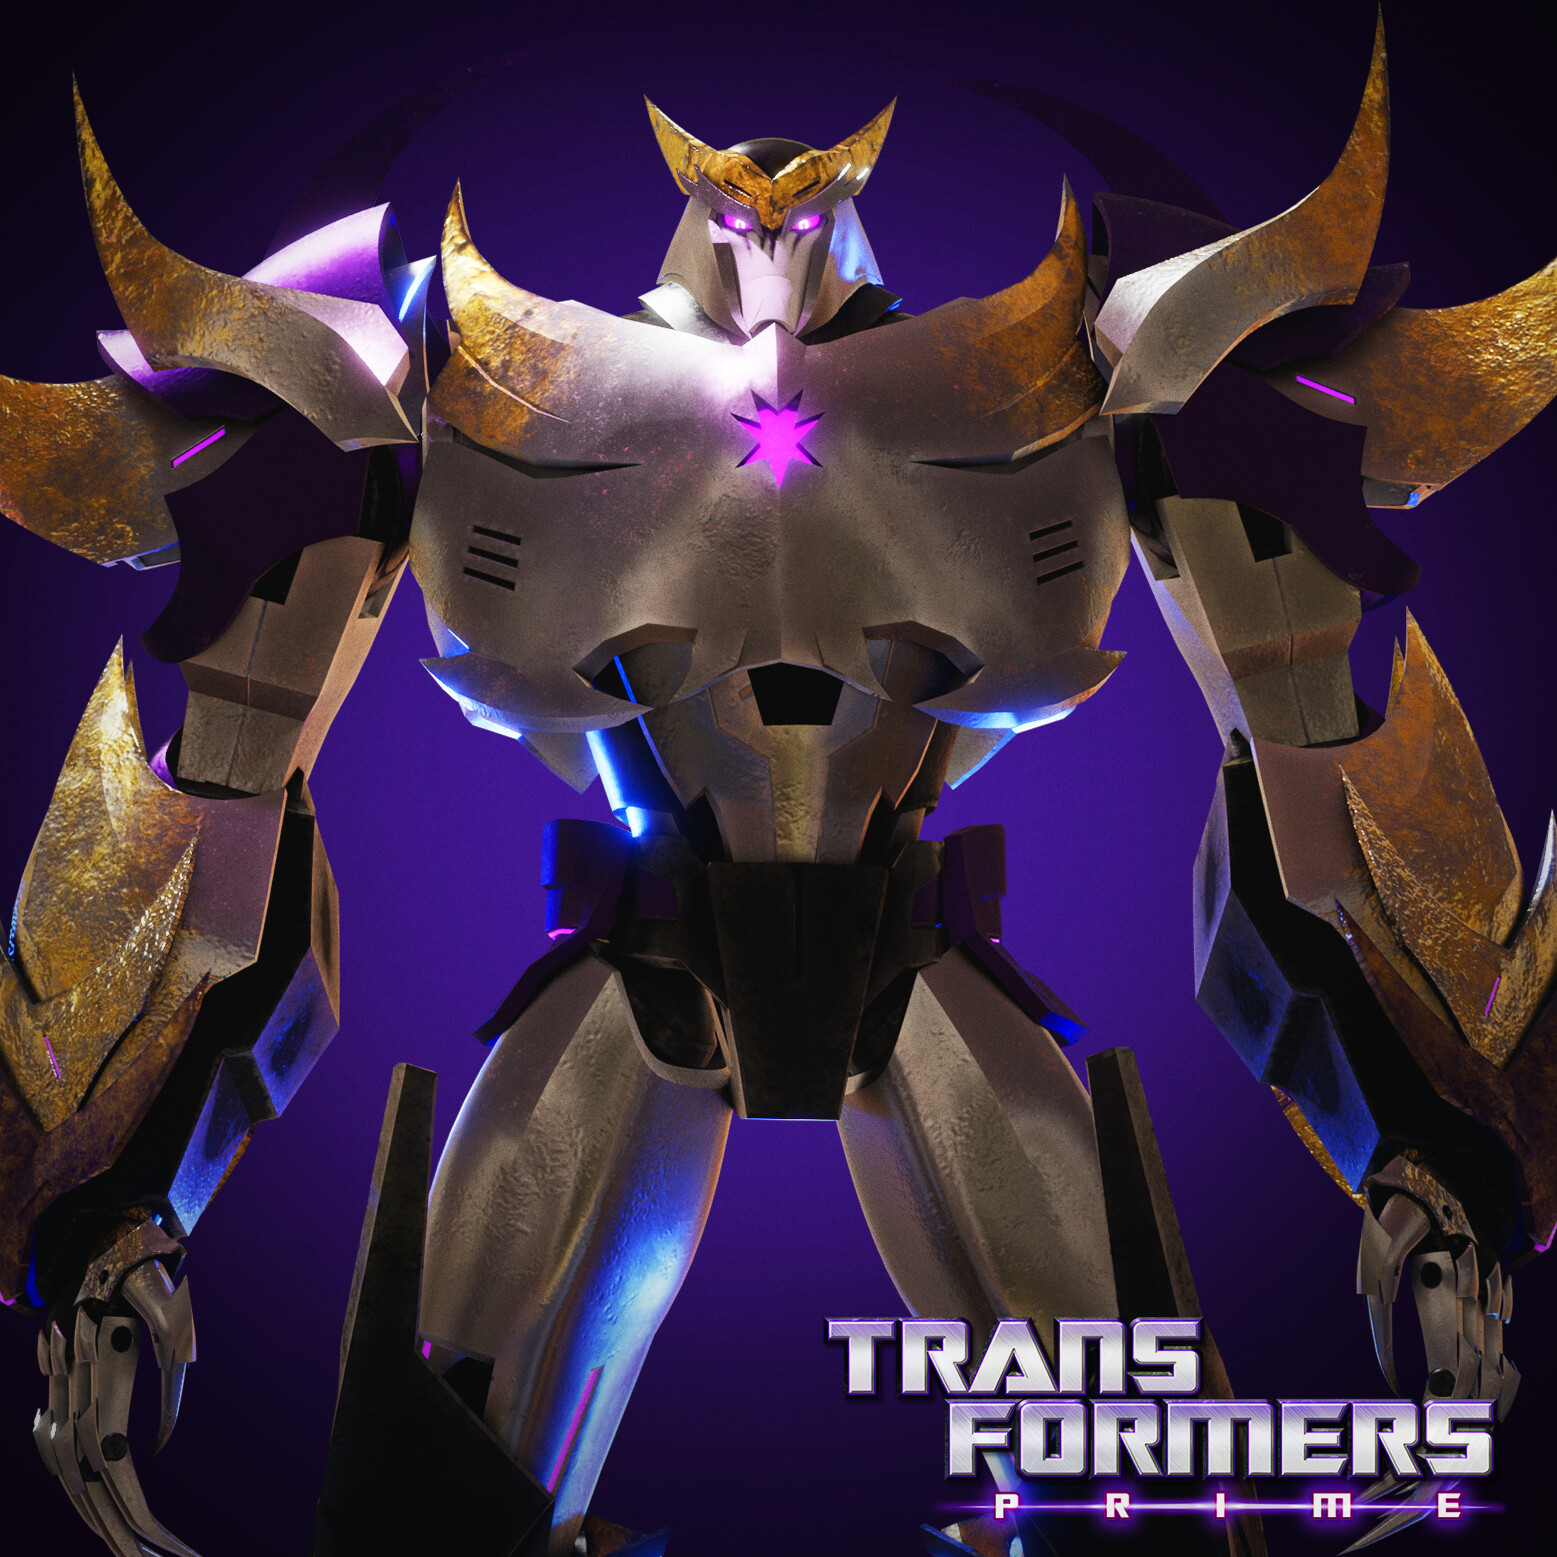 Megatron Transformers Prime Rig - 3D Model by billnguyen1411